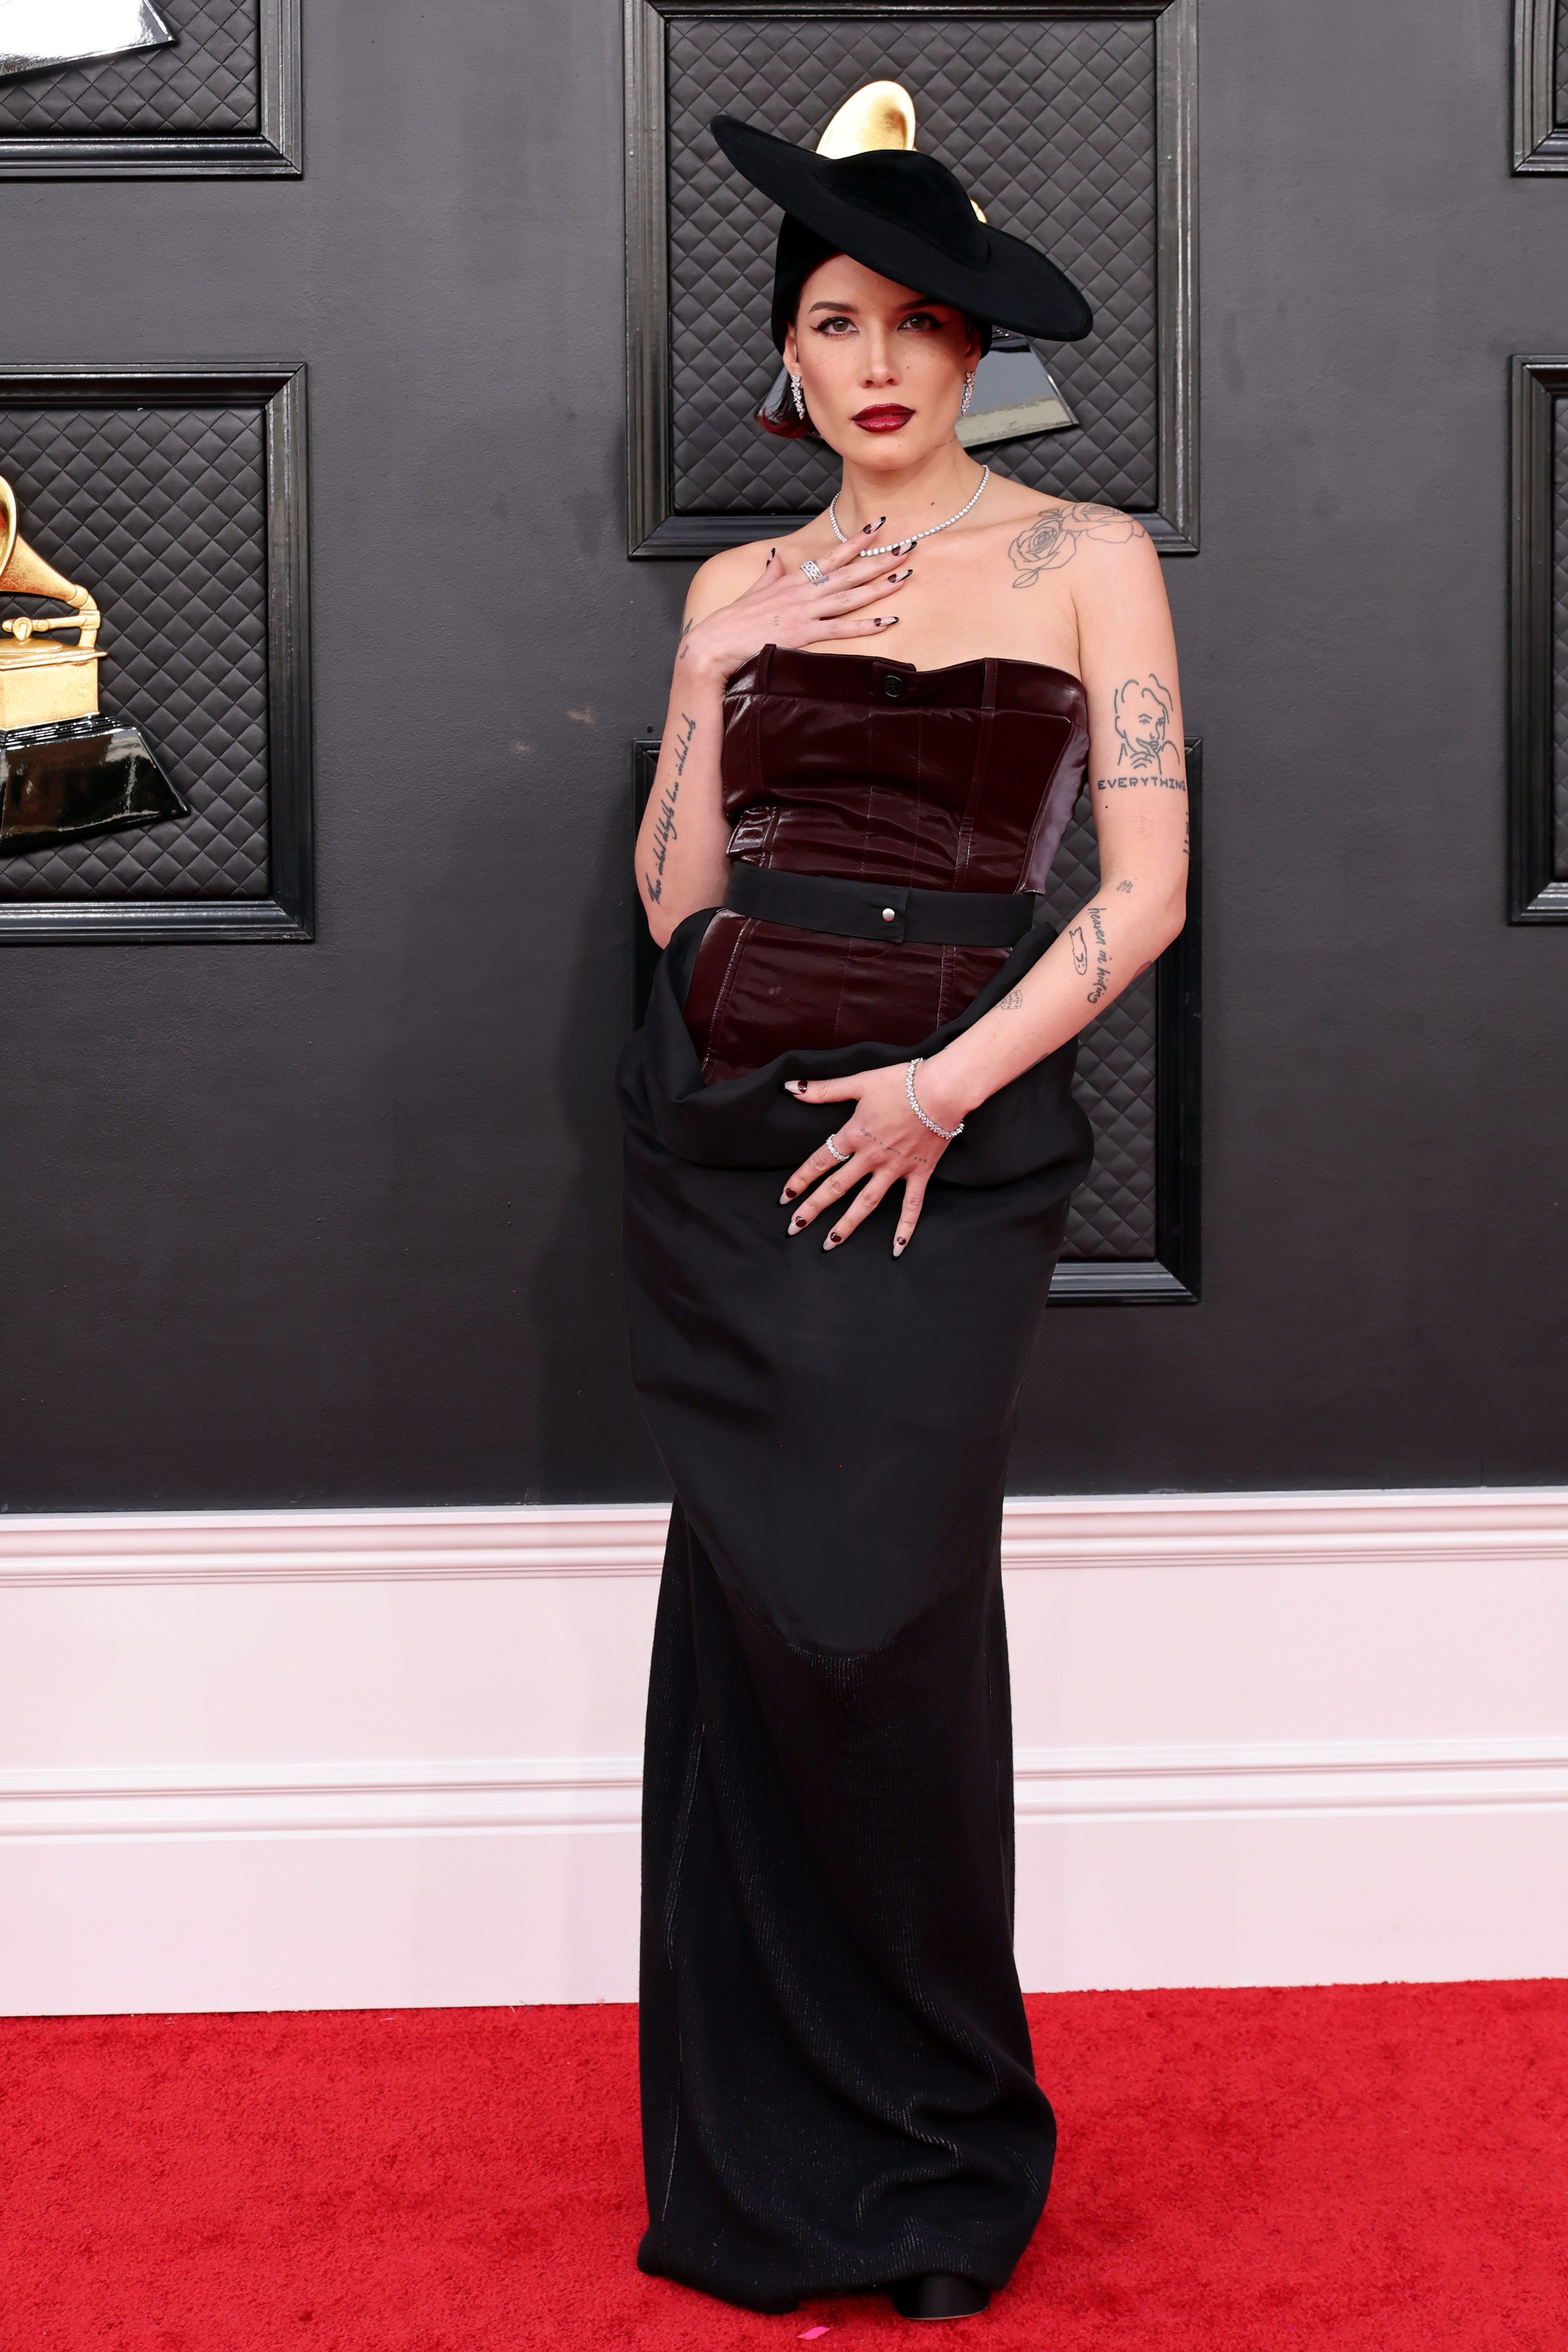 Halsey Attends 2022 Grammy Awards Days After Surgery